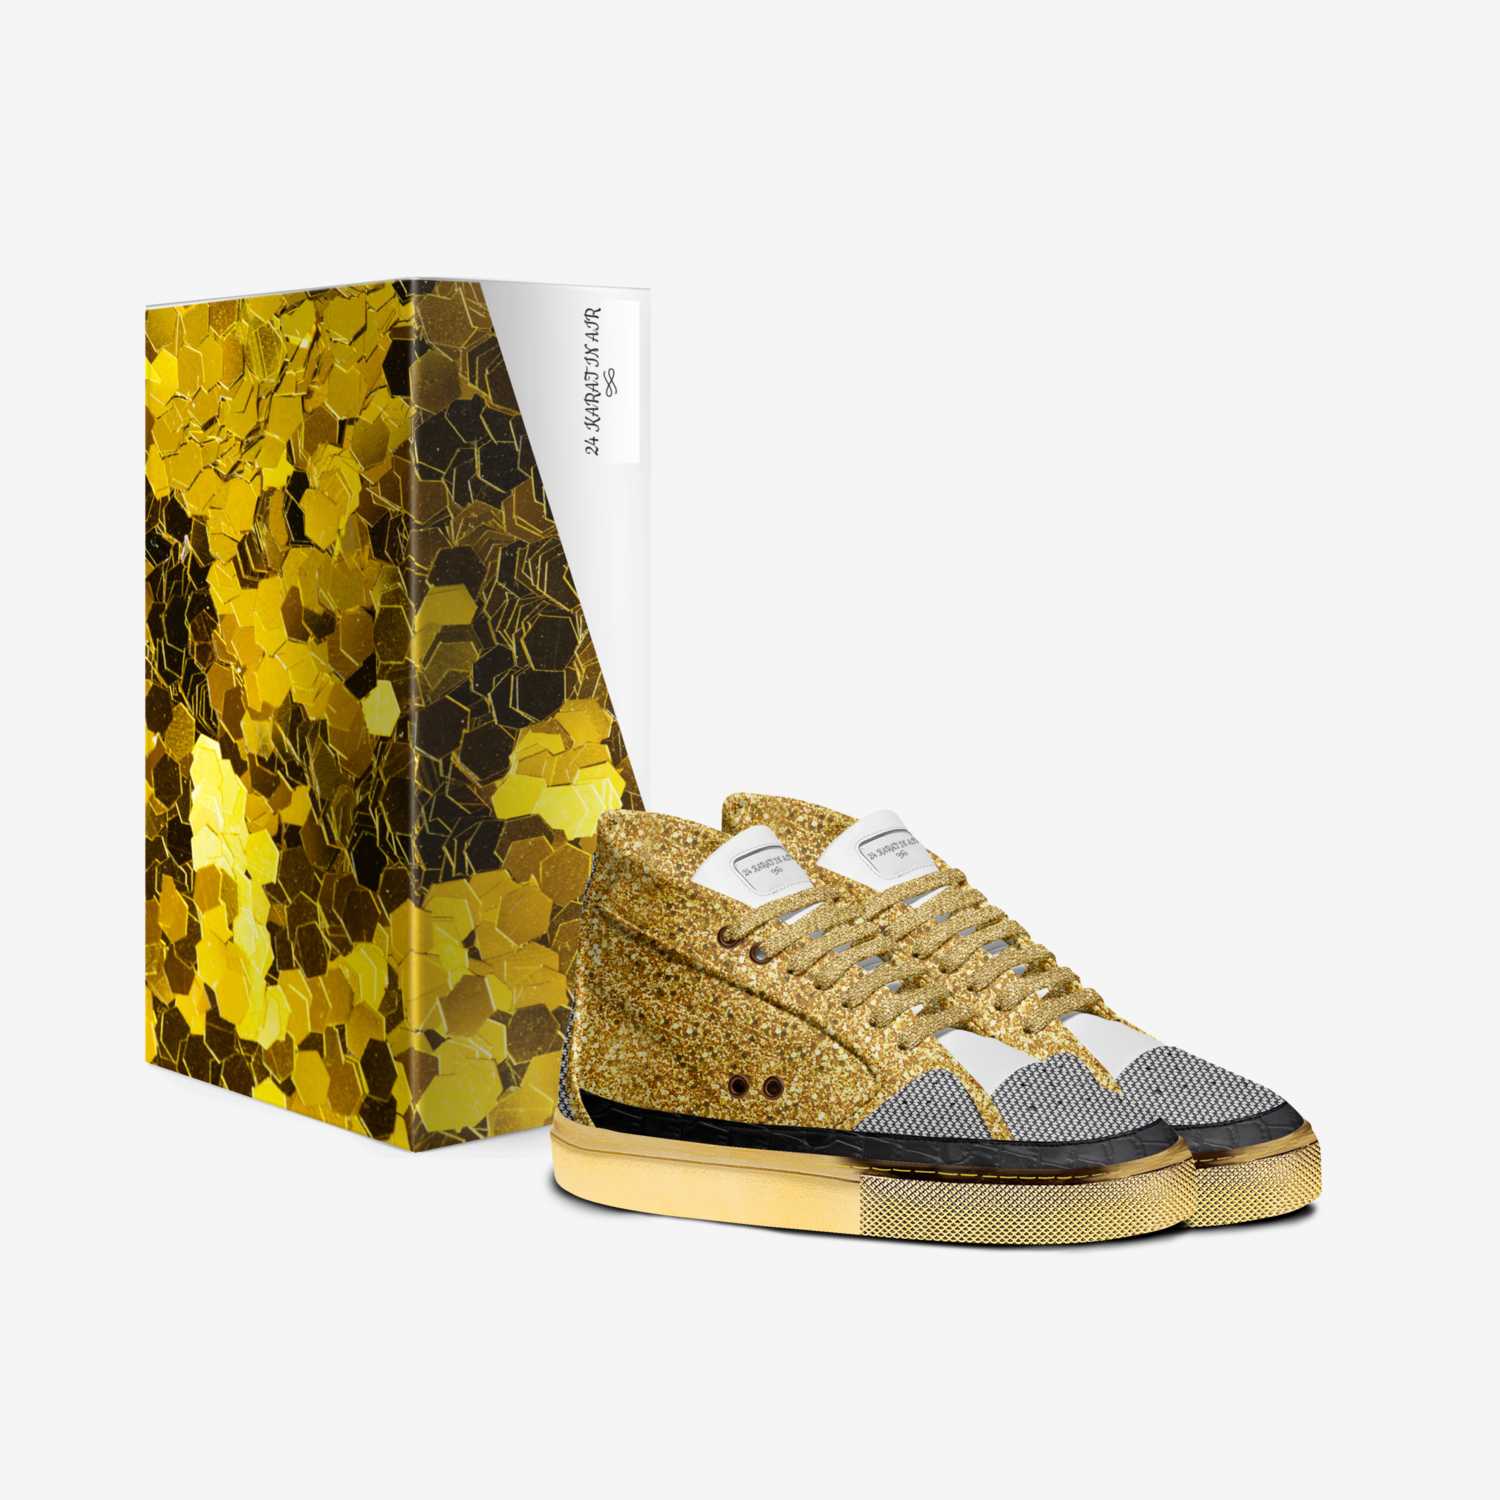 24 KARAT IN AIR custom made in Italy shoes by Pamela Harris | Box view